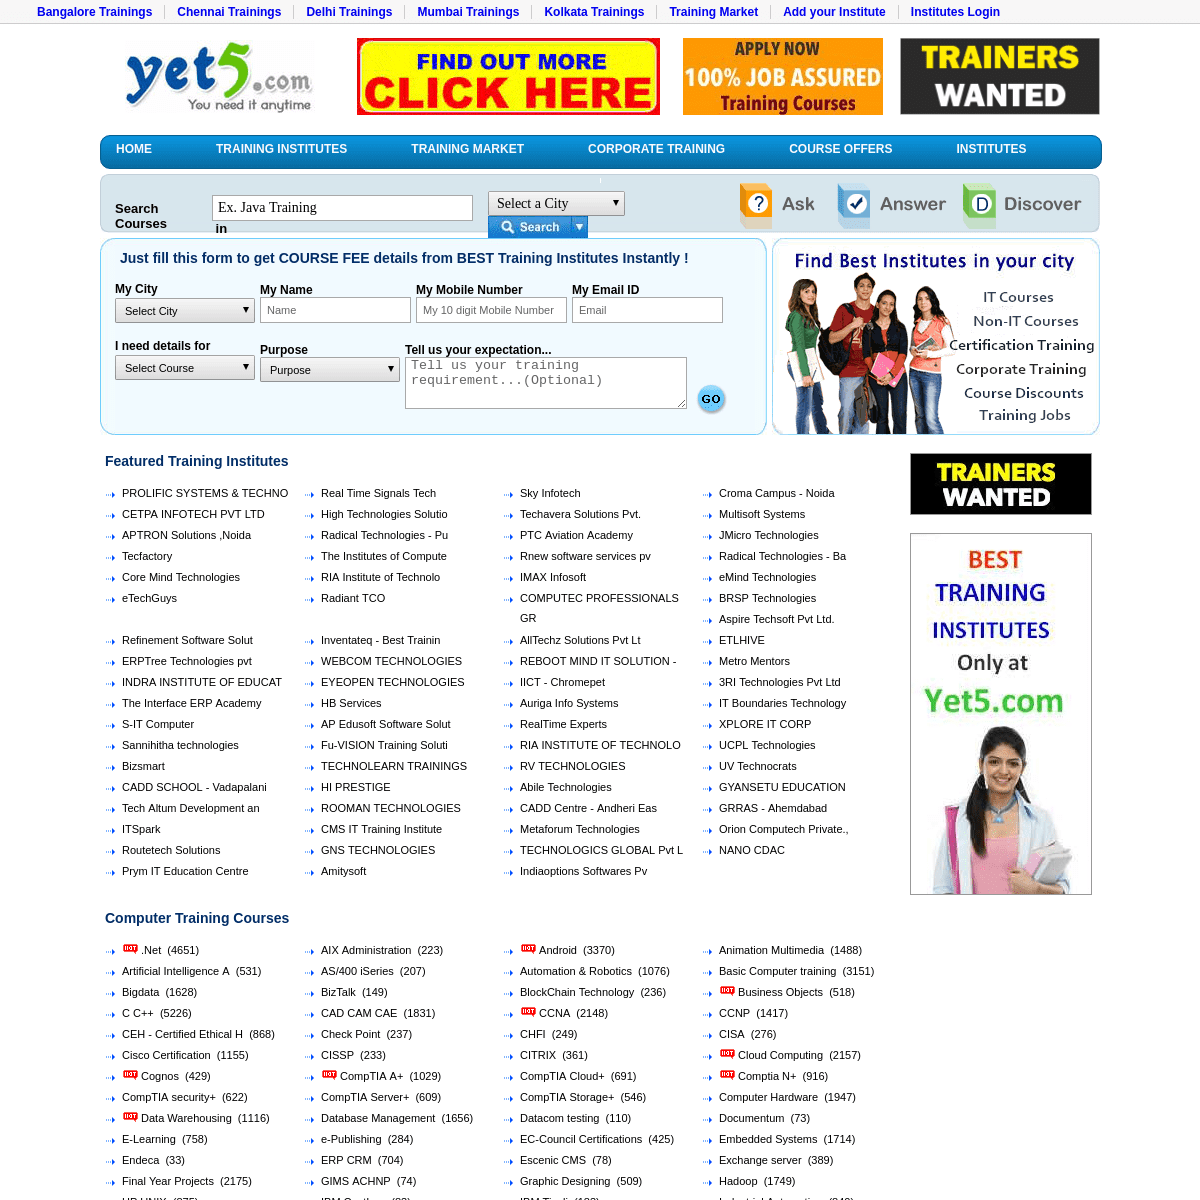 Yet5.com - Training Institutes, Computer Courses and Corporate Training Online India